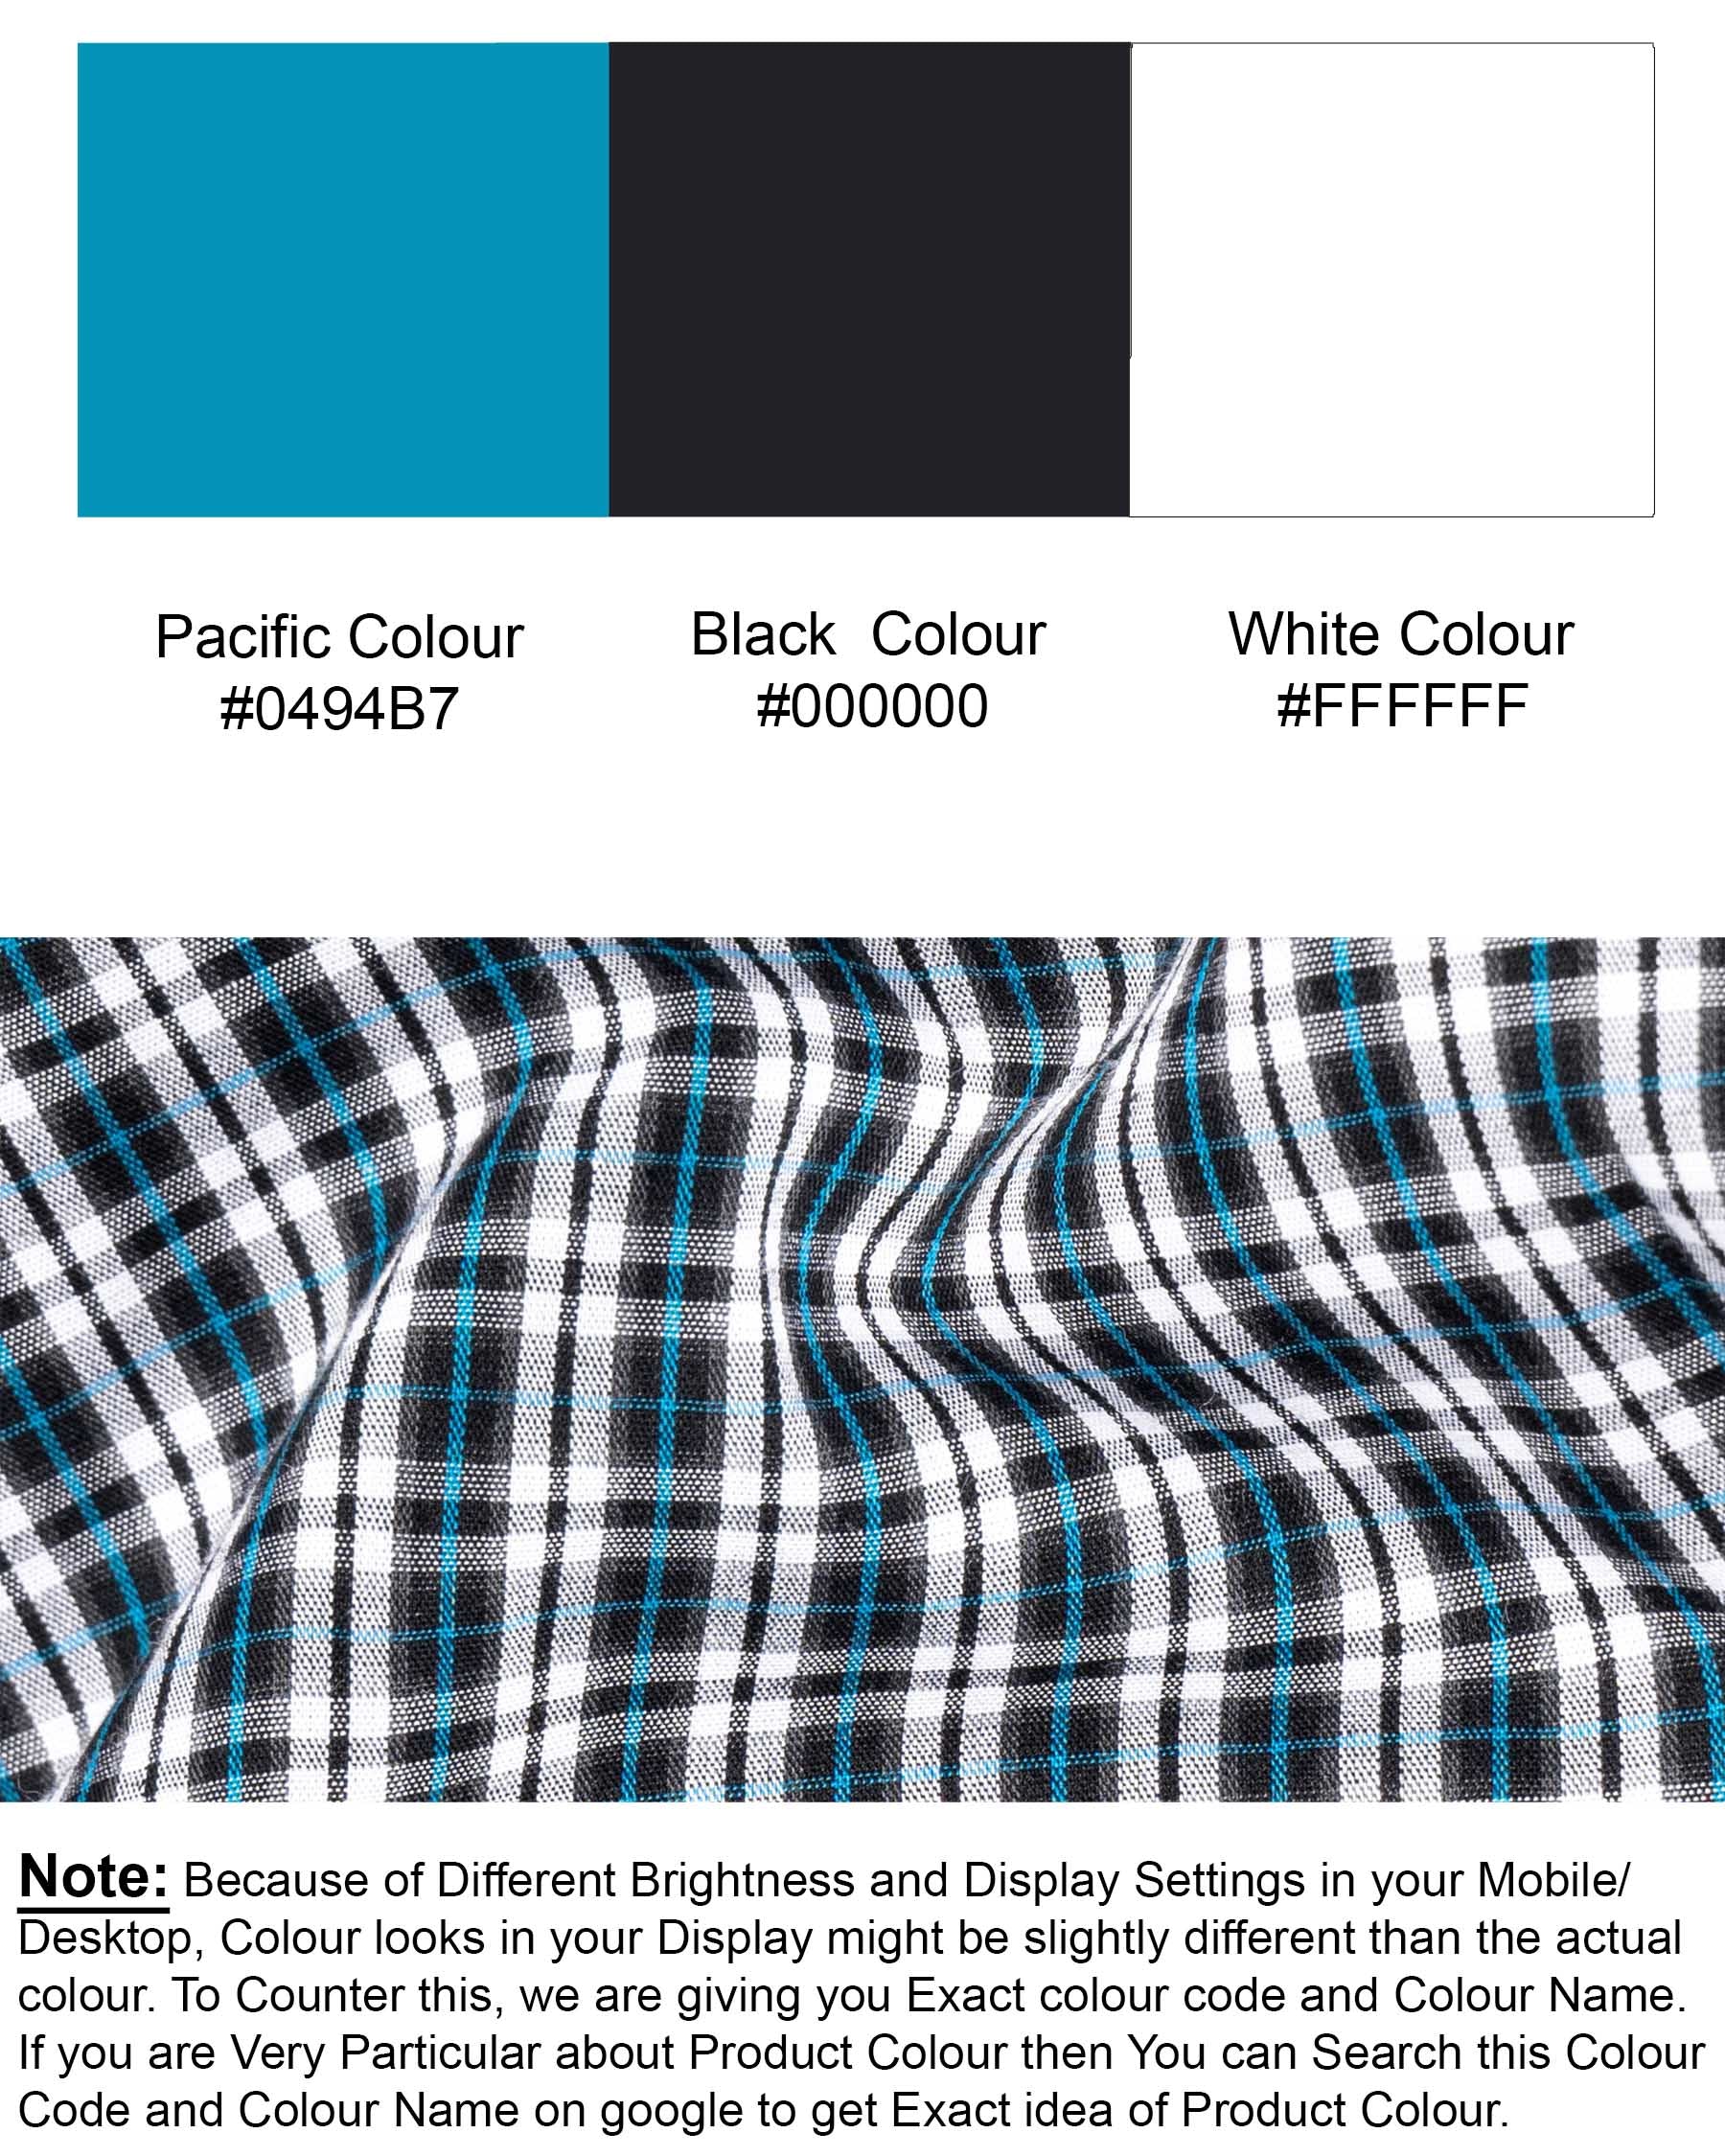 Black and Pacific Blue Plaid Premium Cotton Shirt 6425-BLK-38, 6425-BLK-H-38, 6425-BLK-39, 6425-BLK-H-39, 6425-BLK-40, 6425-BLK- M-H-40, 6425-BLK-42, 6425-BLK-H-42, 6425-BLK-44, 6425-BLK-H-44, 6425-BLK-46, 6425-BLK-H-46, 6425-BLK-48, 6425-BLK-H-48, 6425-BLK-50, 6425-BLK-H-50, 6425-BLK-52, 6425-BLK-H-52